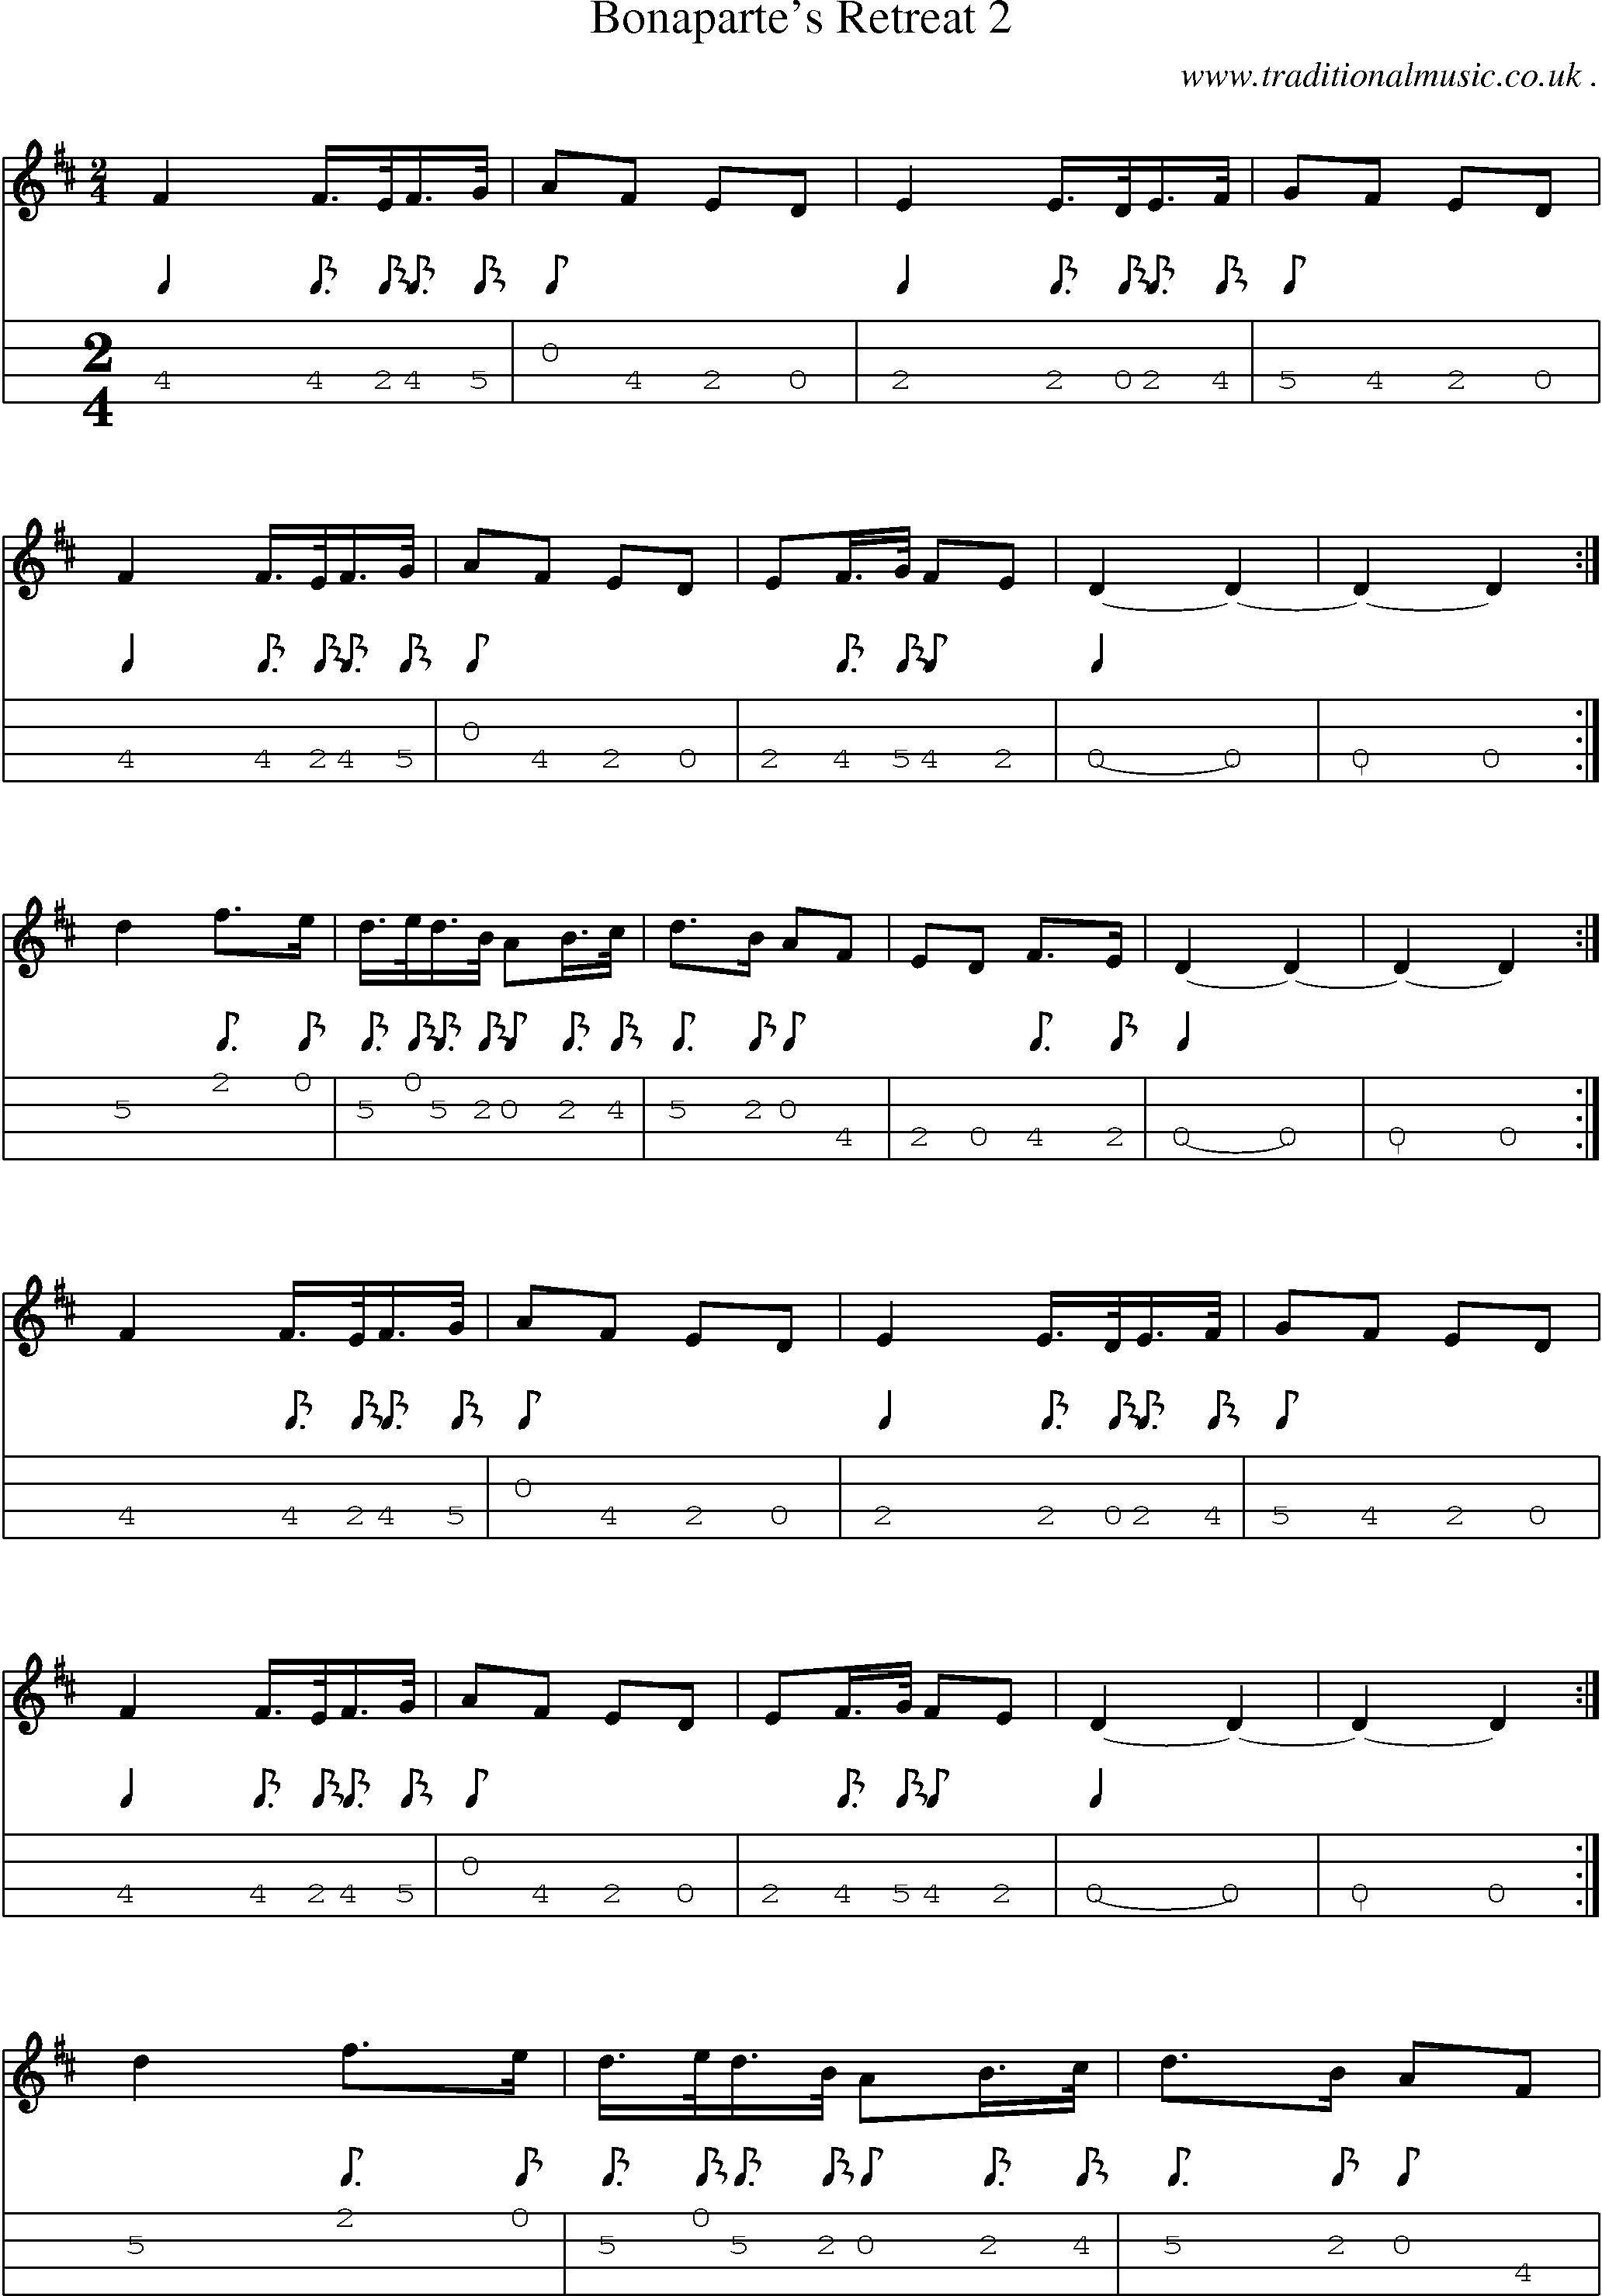 Music Score and Mandolin Tabs for Bonapartes Retreat 2